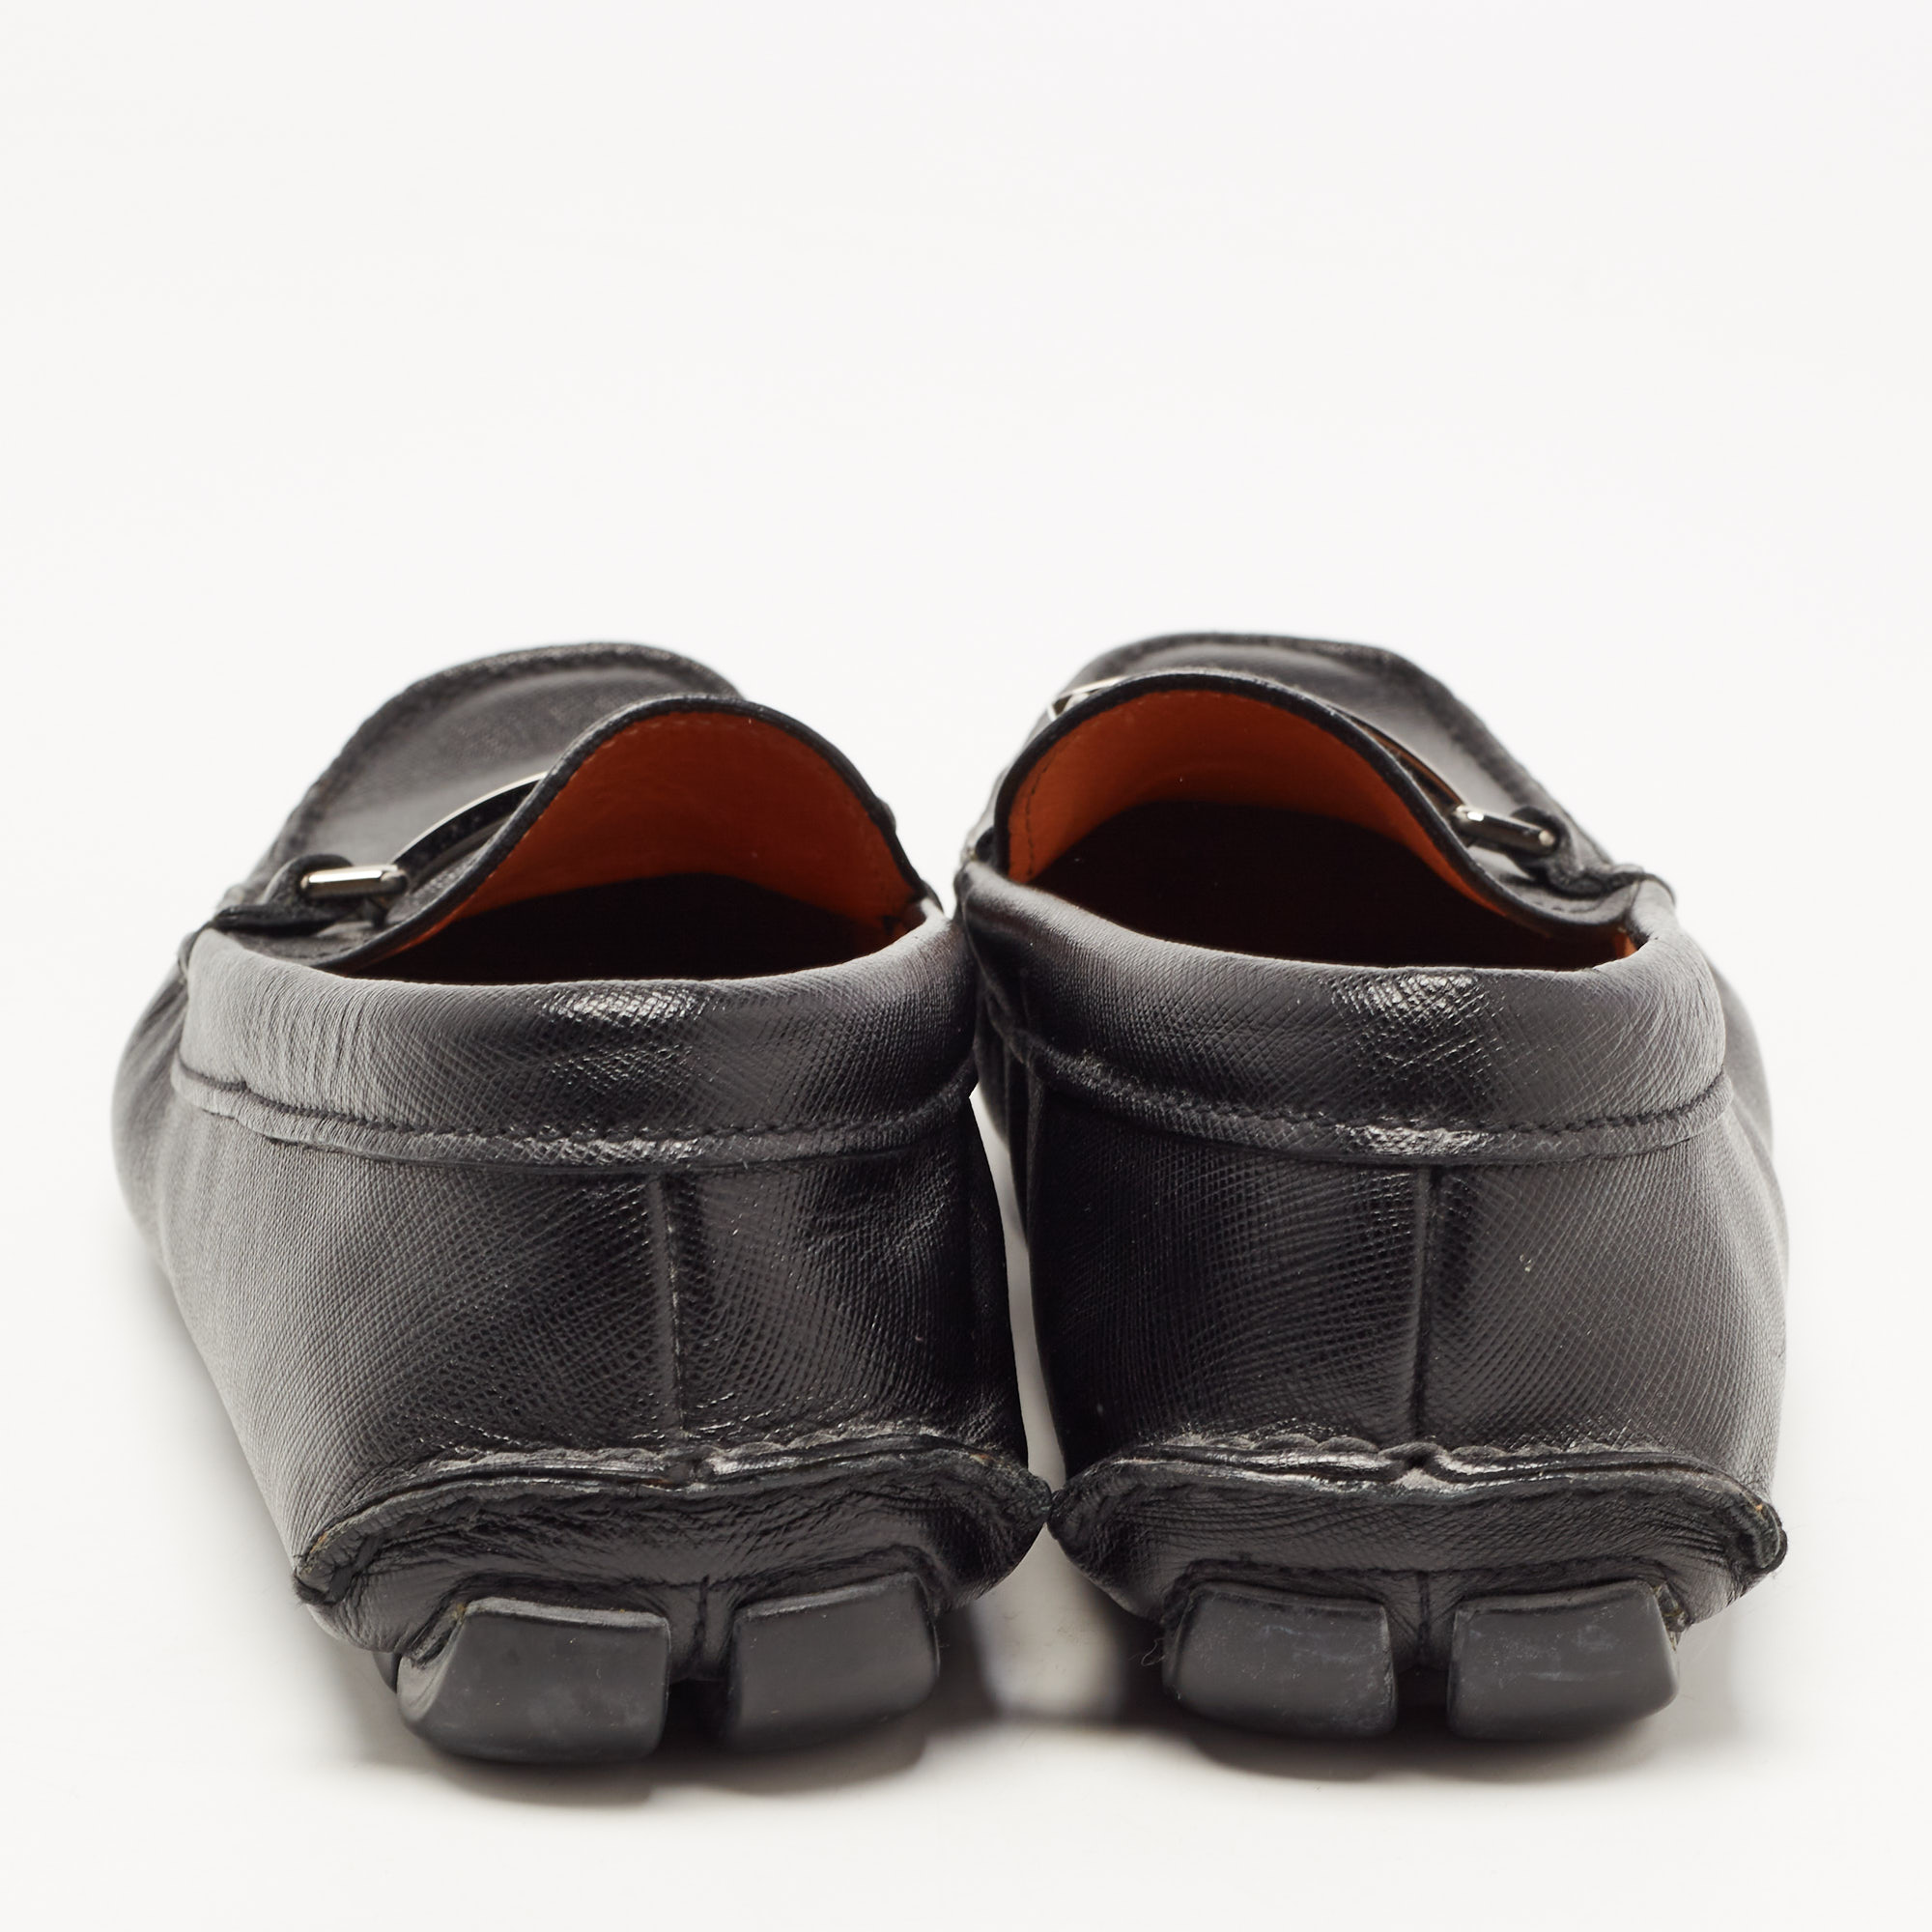 Prada Black Saffiano Leather Slip On Loafers Size 42